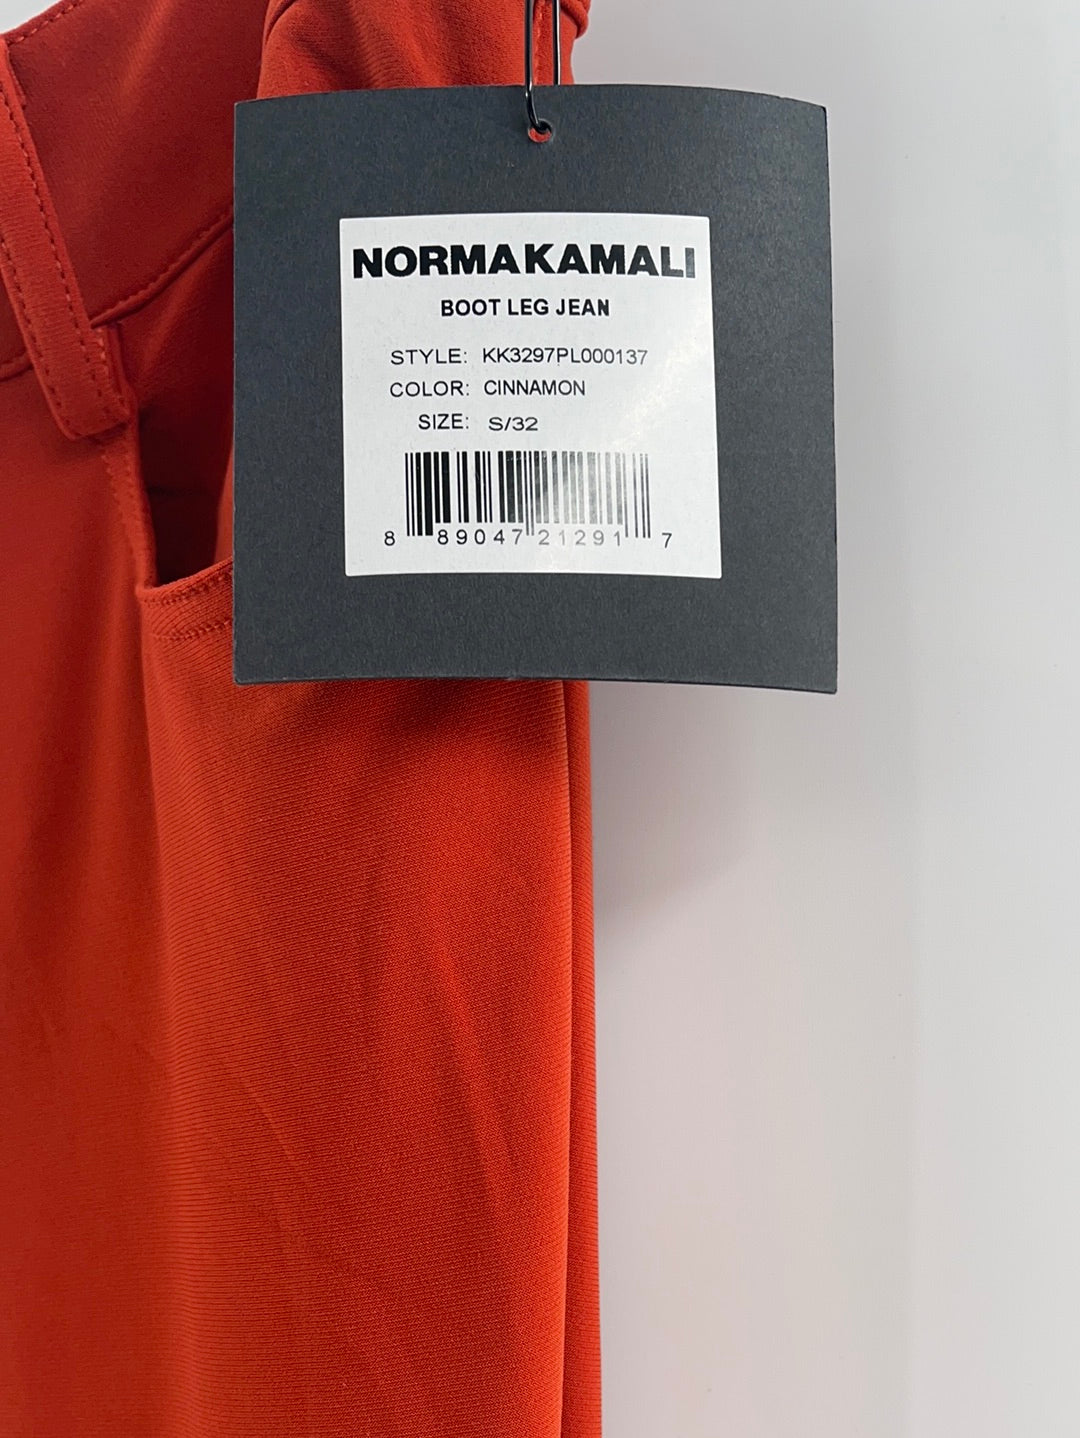 Norma Kamali Cinnamon Colored Pants